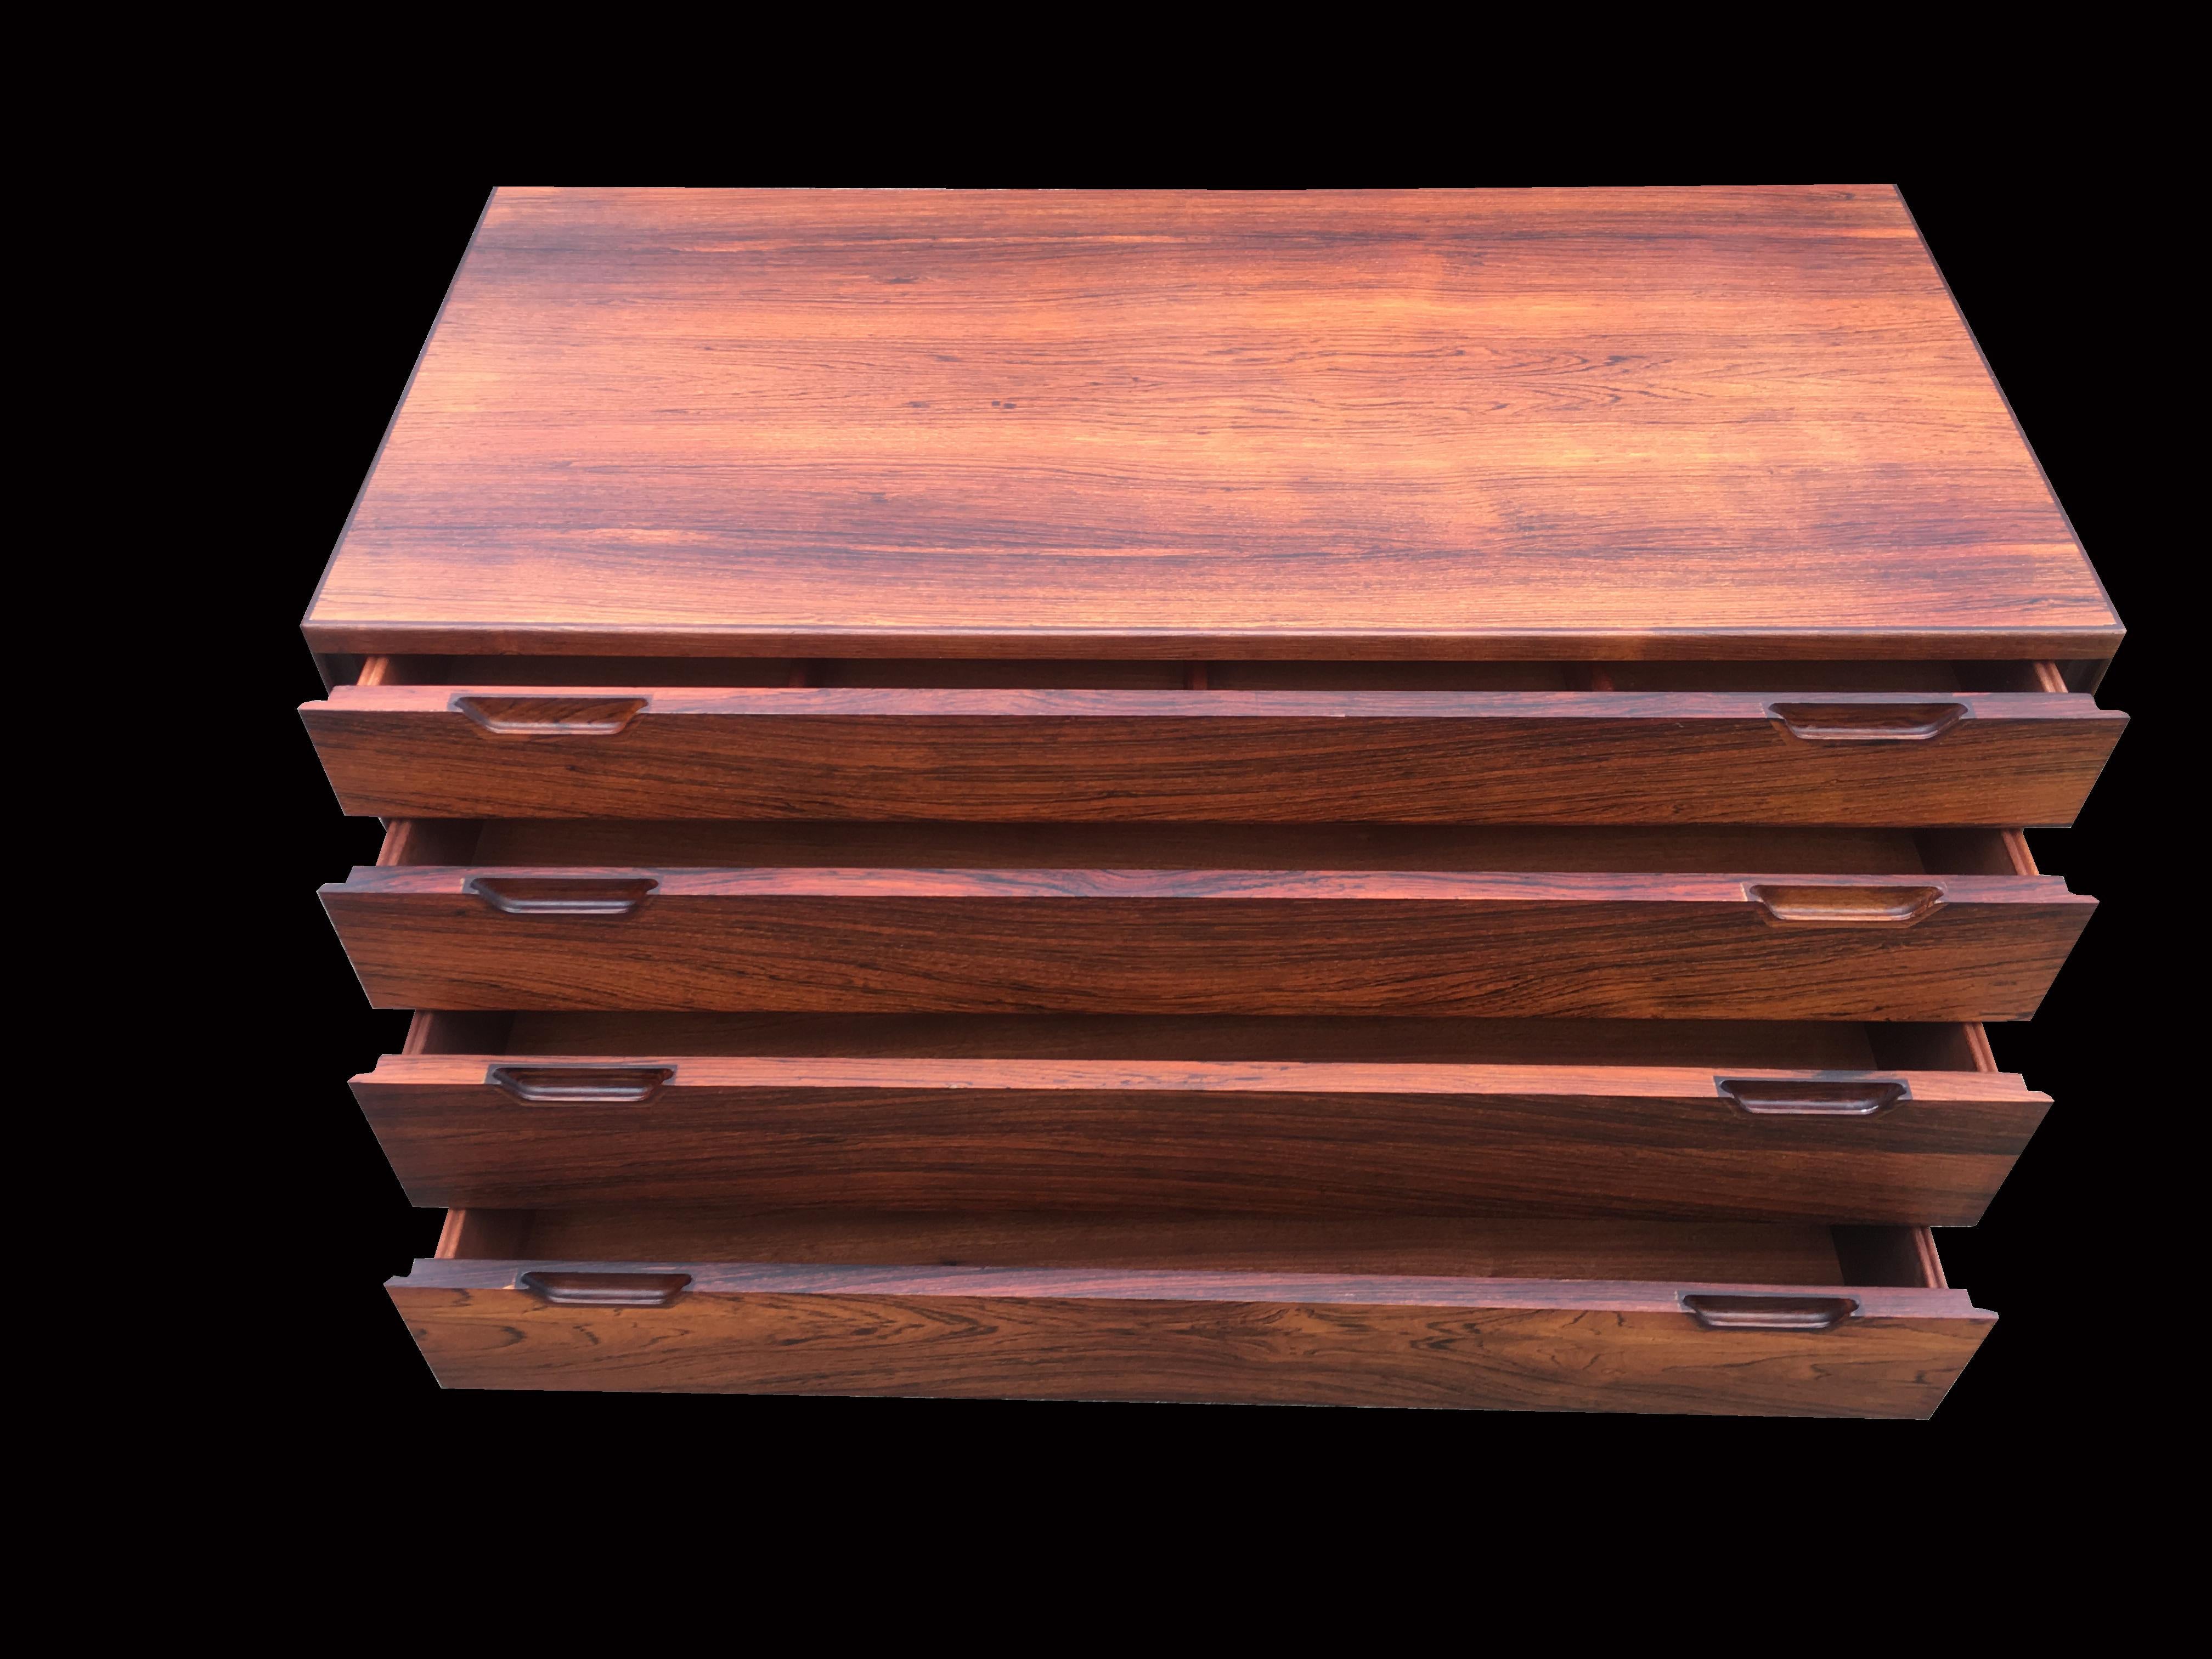 hardwood chest of drawers